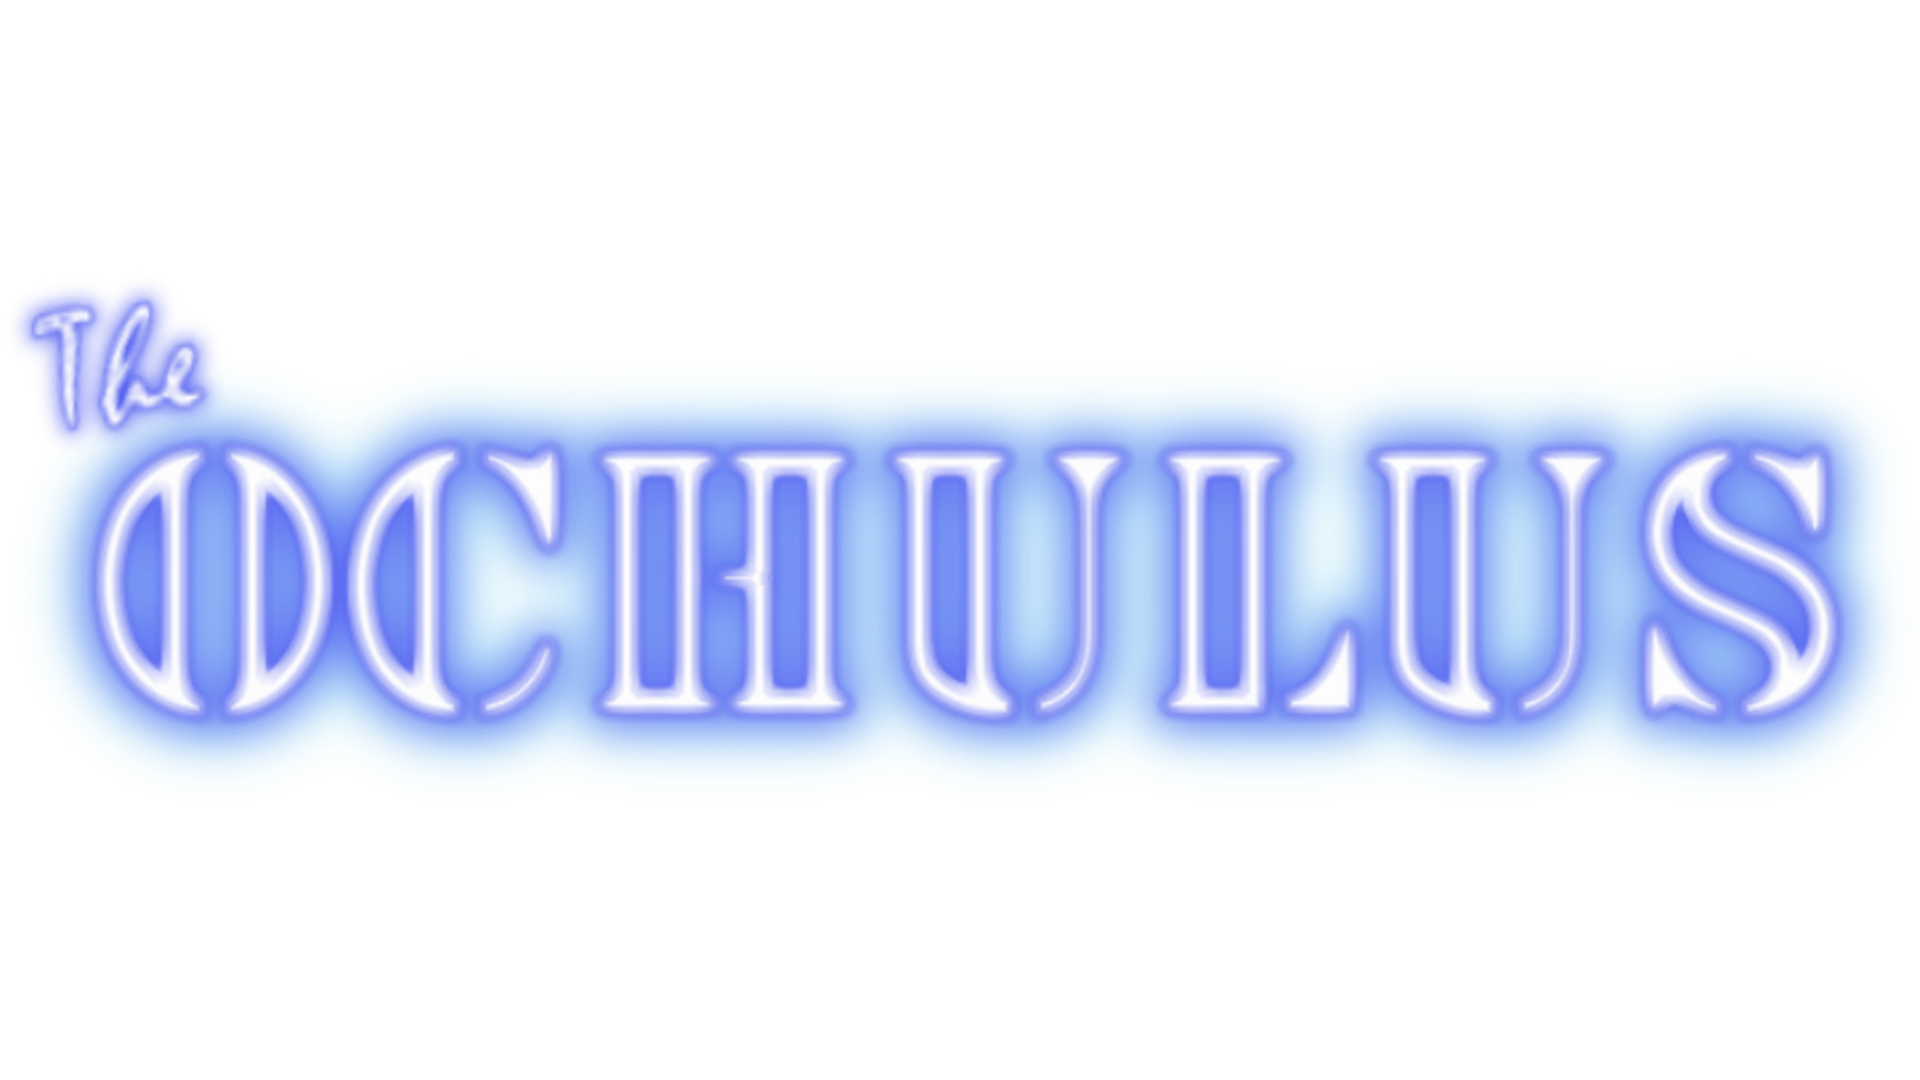 The Ochulus Logo